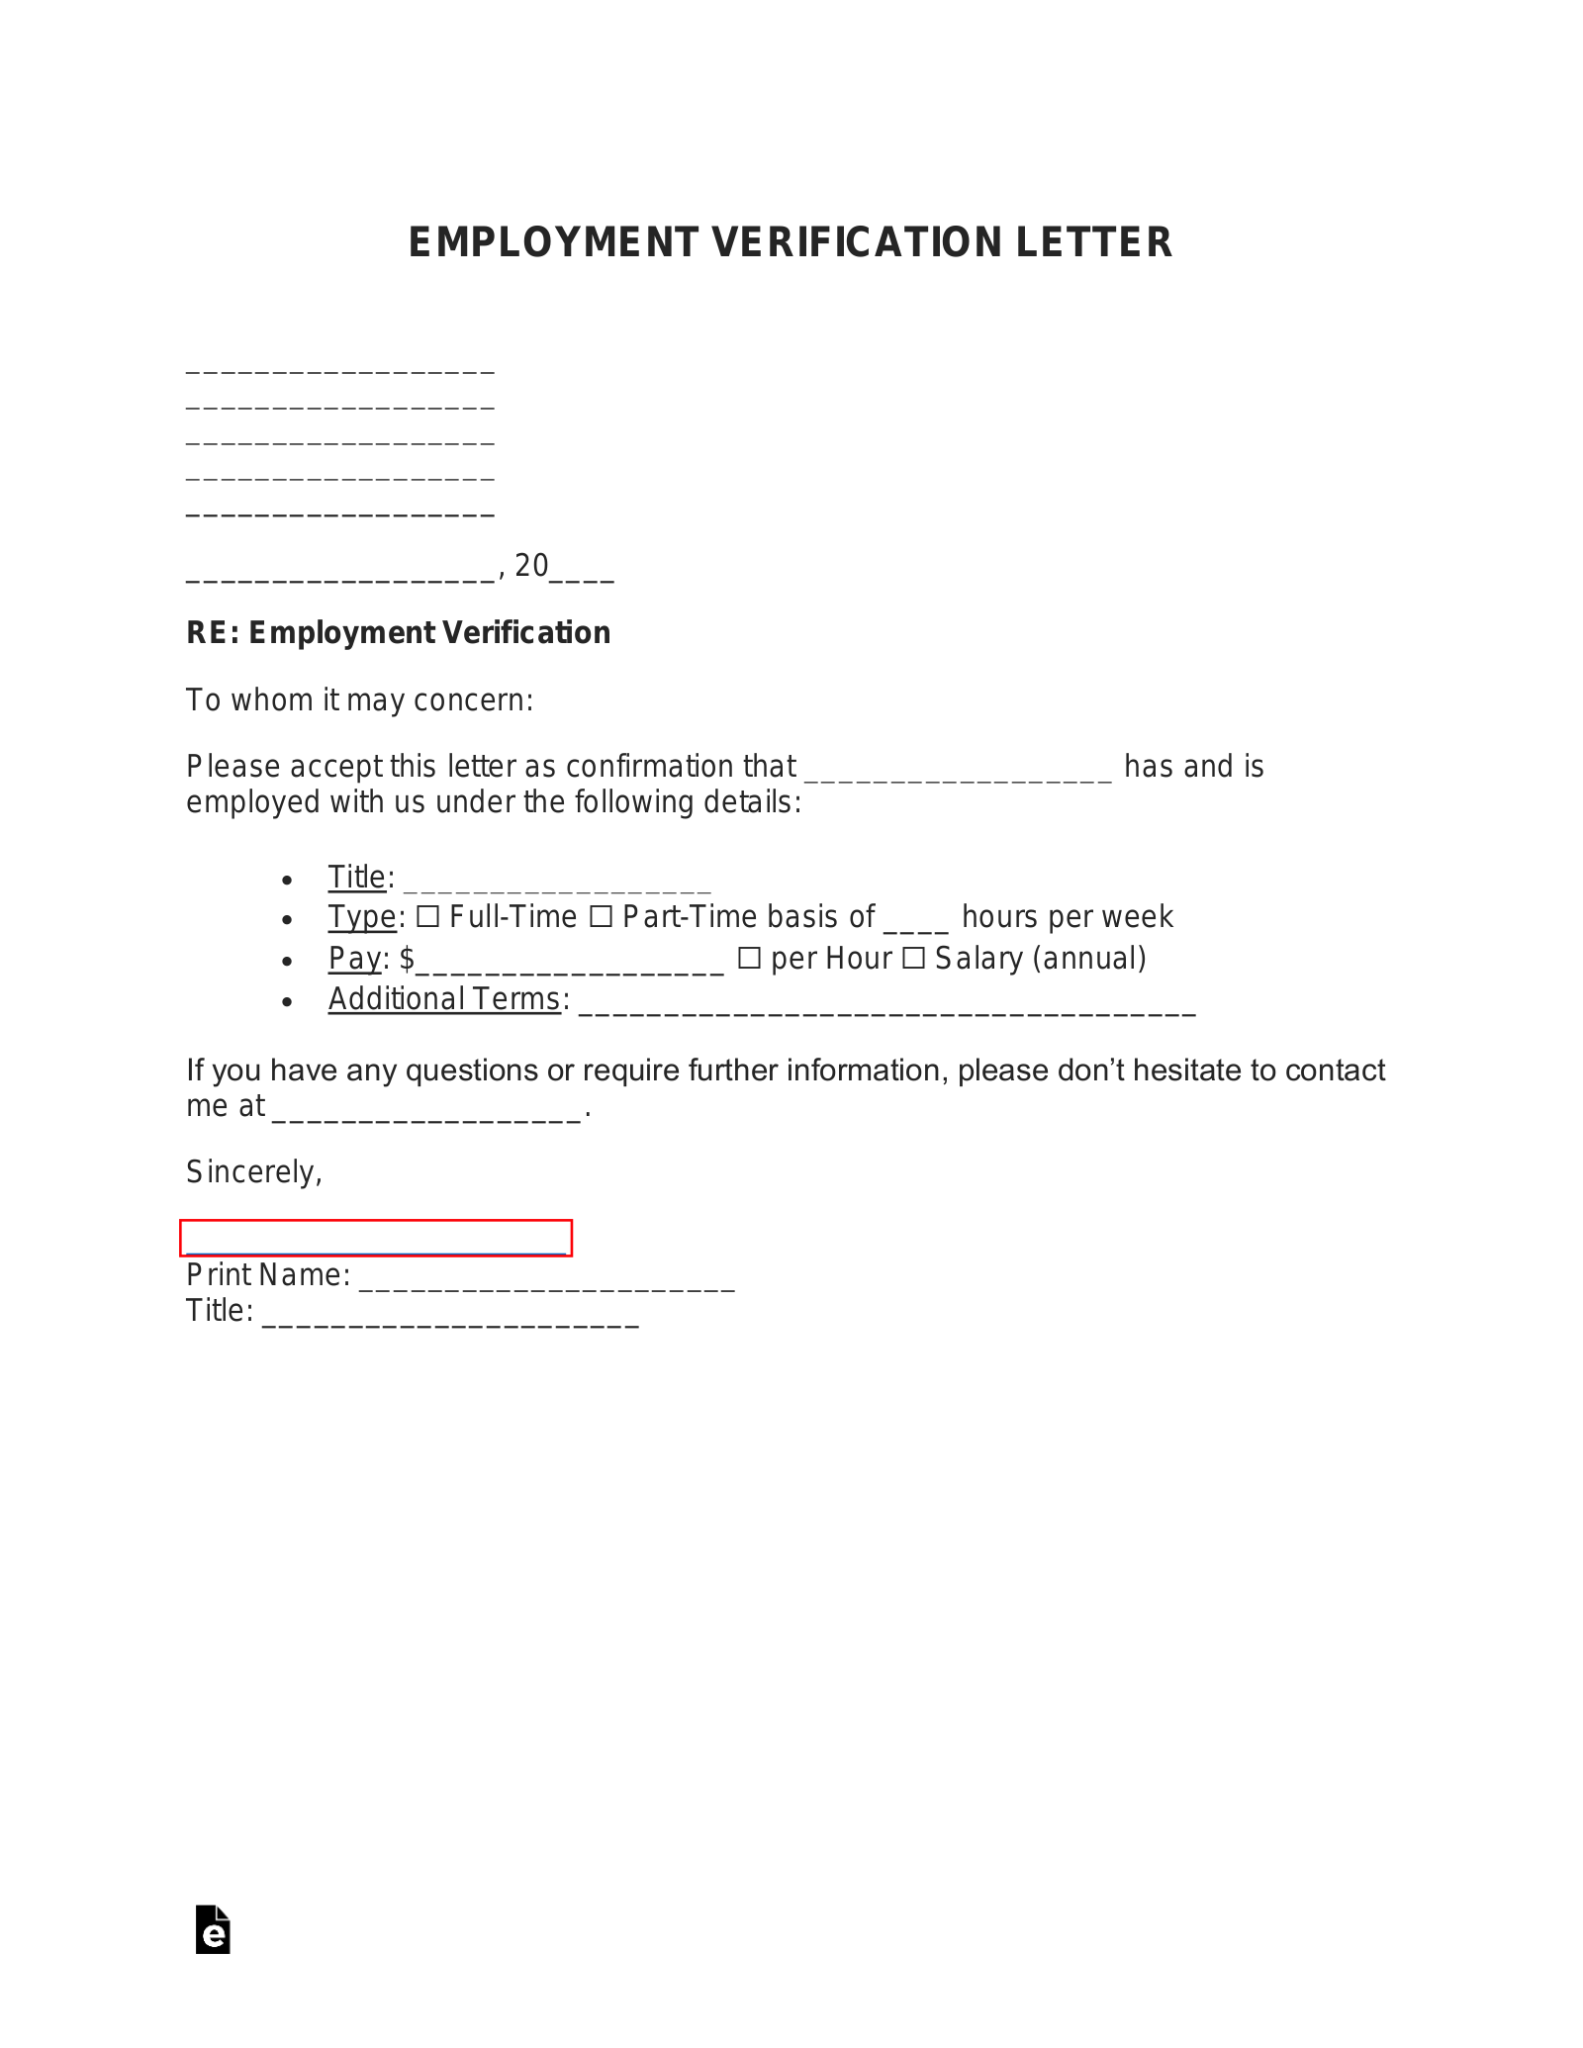 Employment Income Verification Letter Template